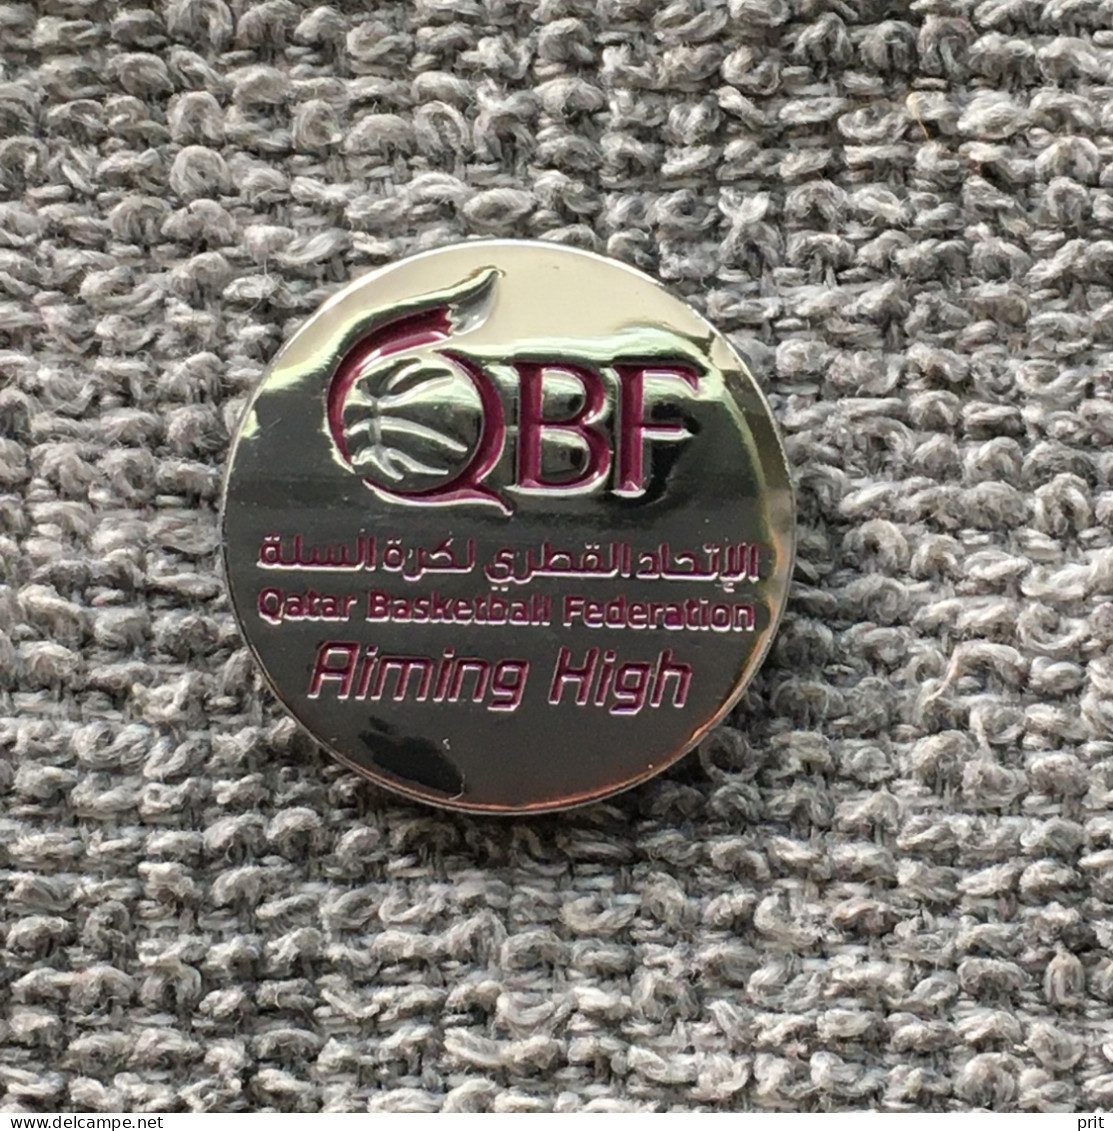 Qatar Basketball Federation Aiming High, Pin Badge Magnetic Metal - Basketball